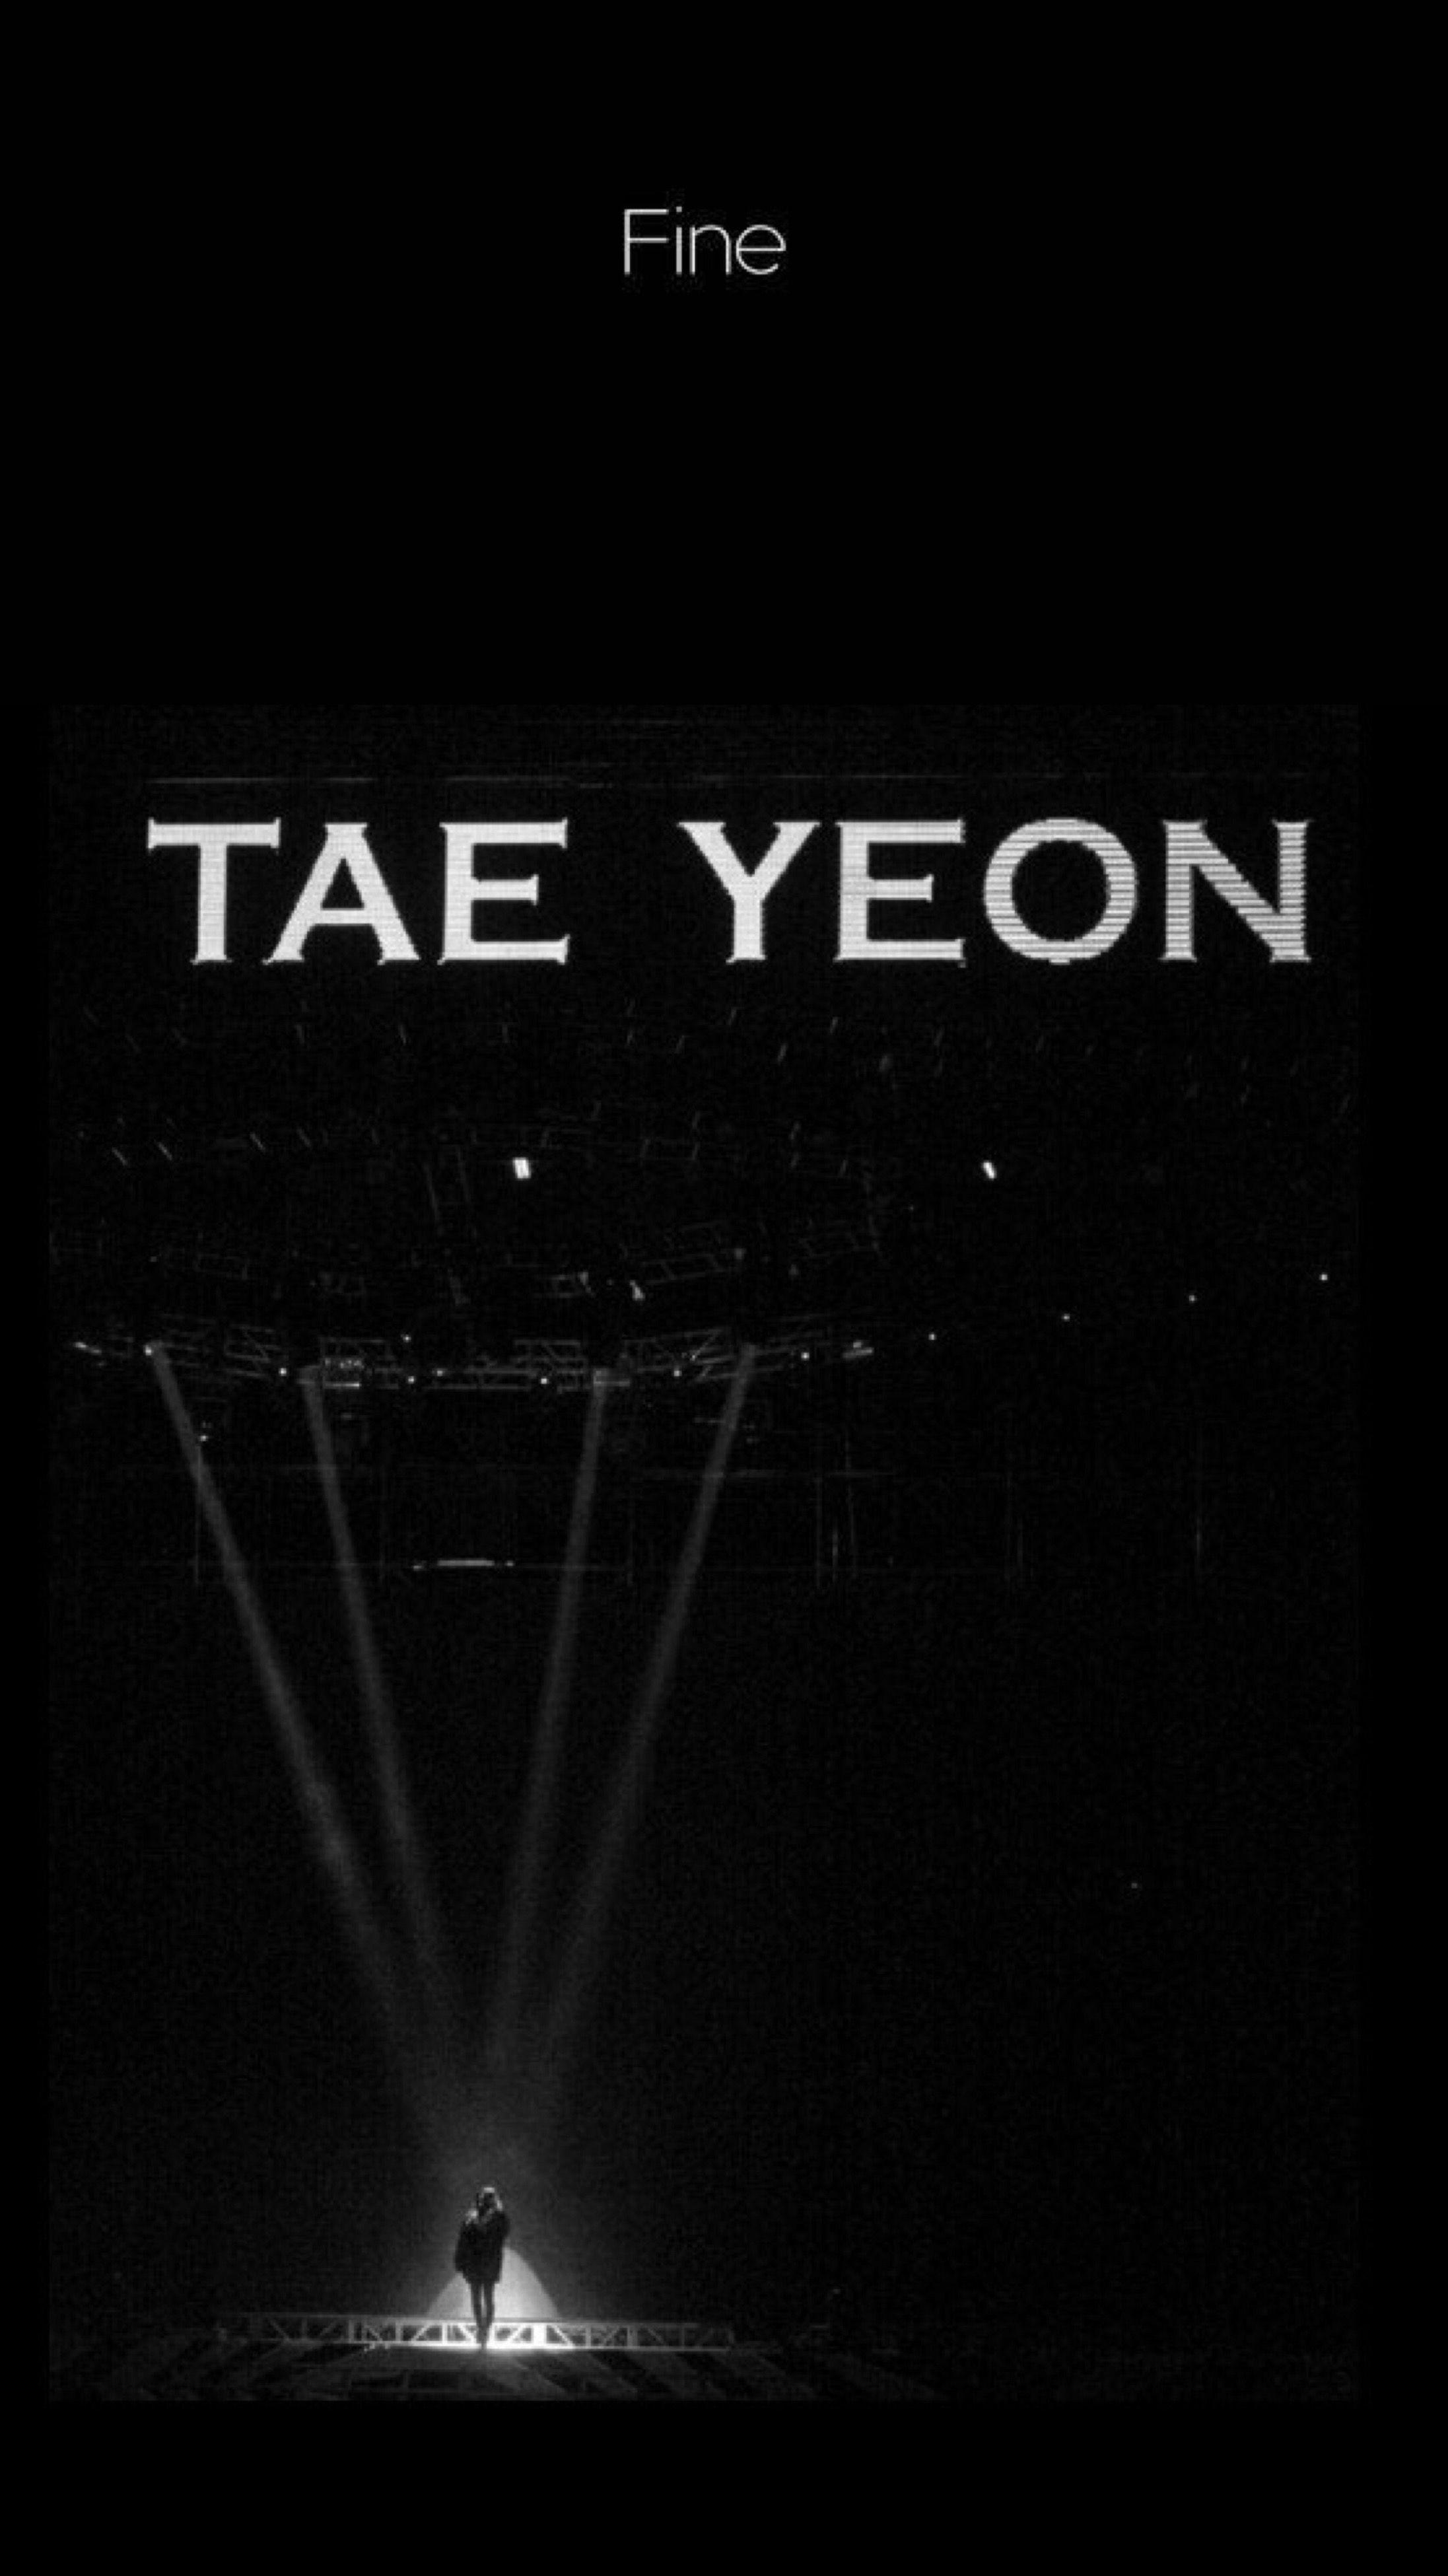 Taeyeon's First Single Digital Album 'My Voice' iPhone wallpaper